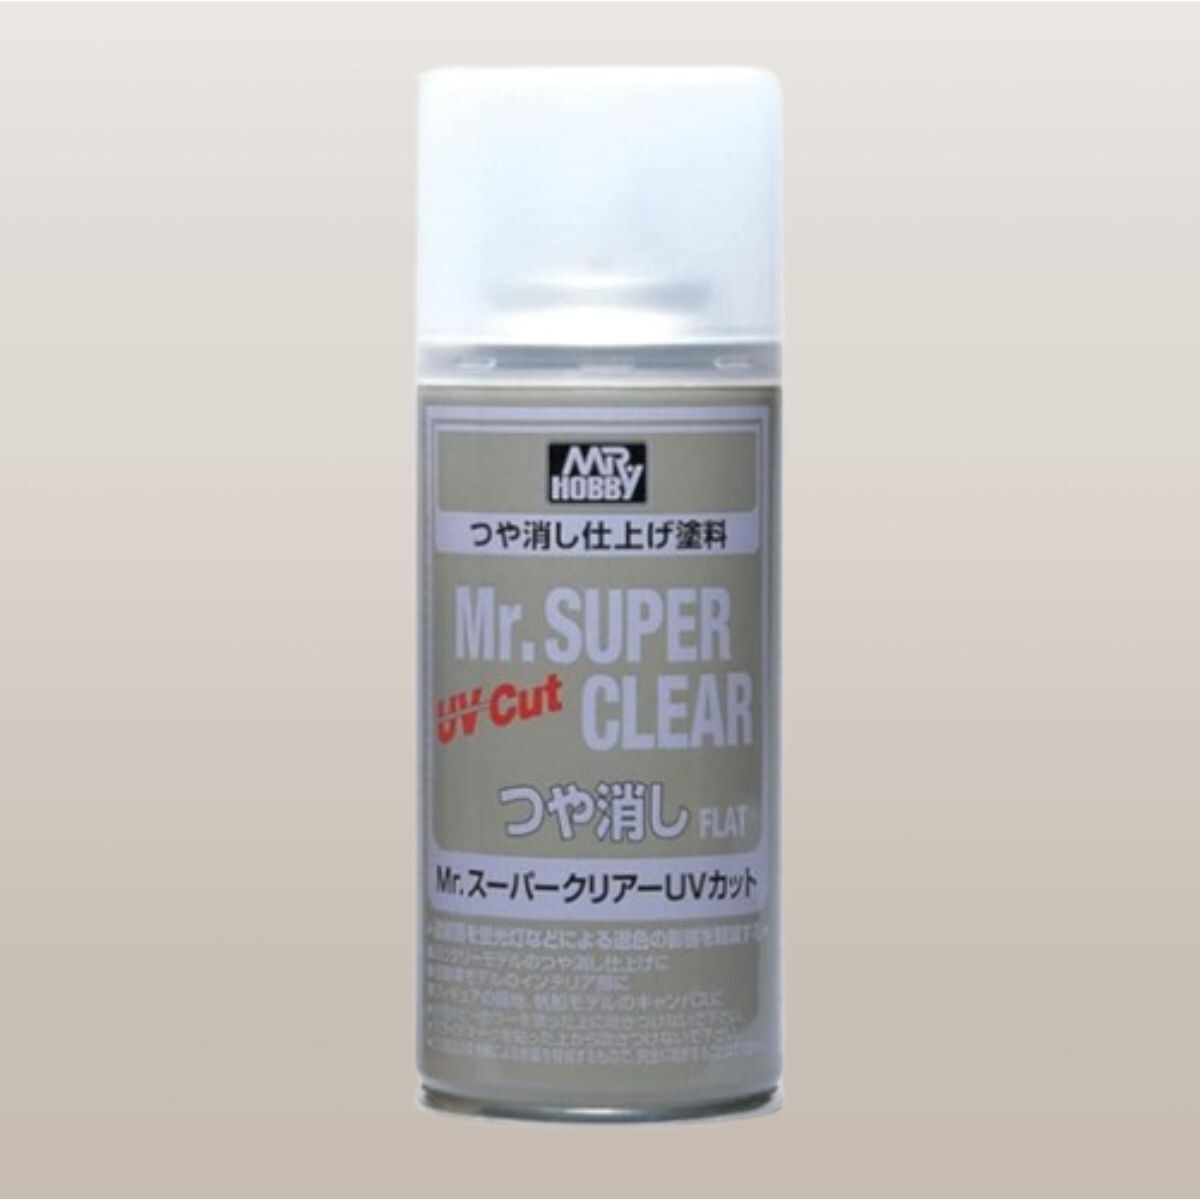 Mr. Super Clear UV Cut Flat Spray